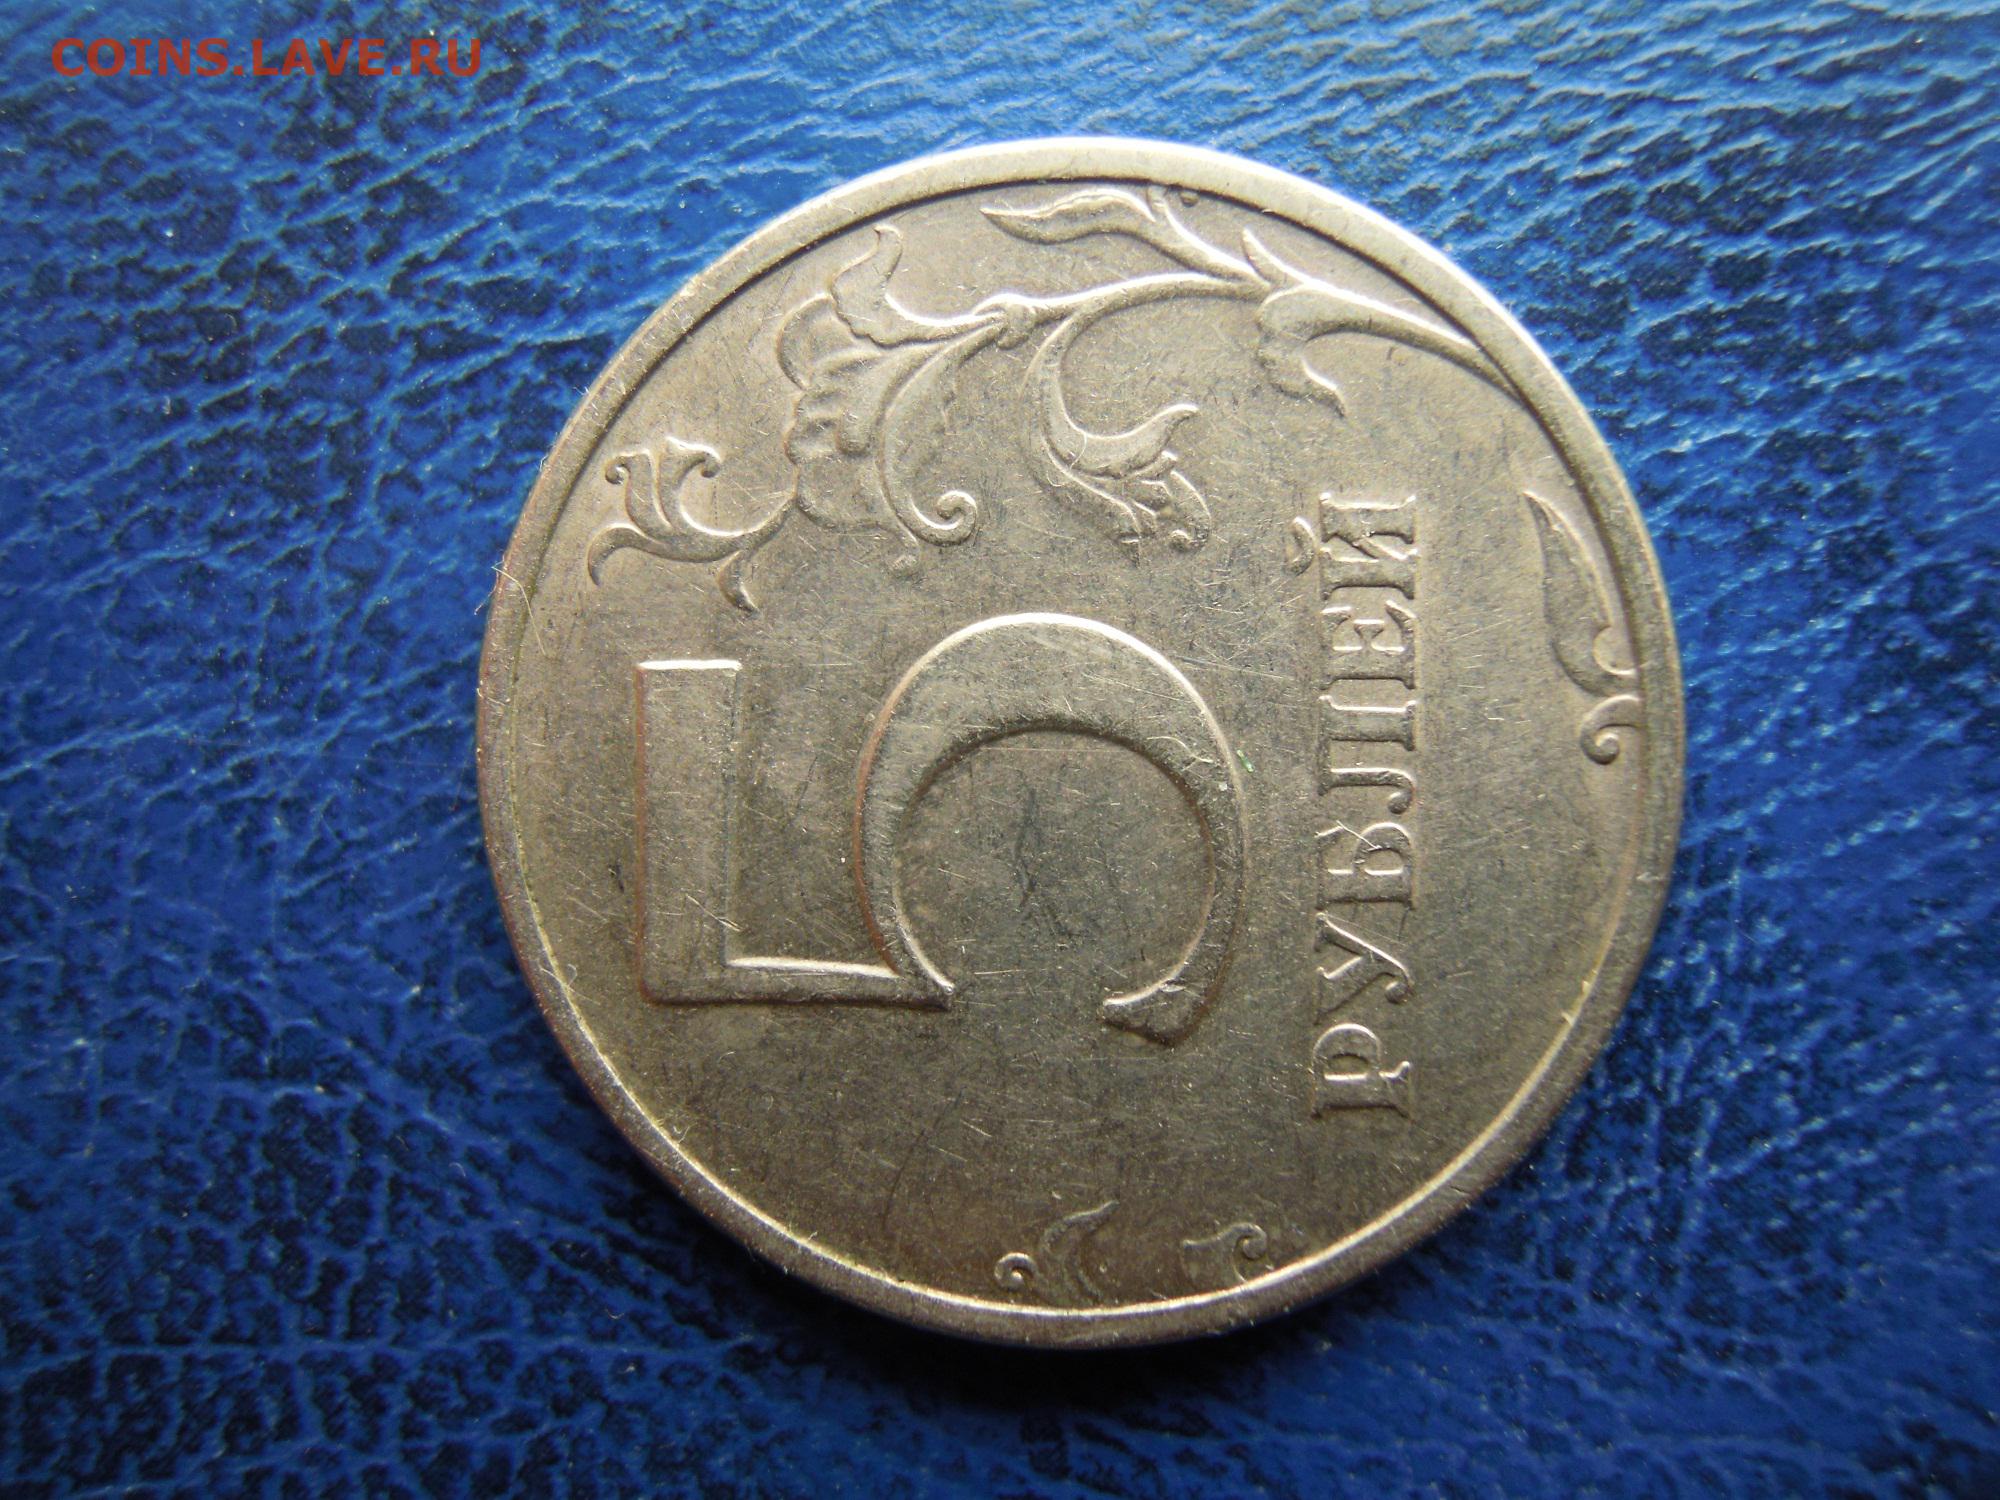 5 рублей 98 года. 5 Рублей 2000 СПМД. 5 Рублей 1998 года ММД. 5 Рублей 1998 года СПМД. Монета 5 рублей.